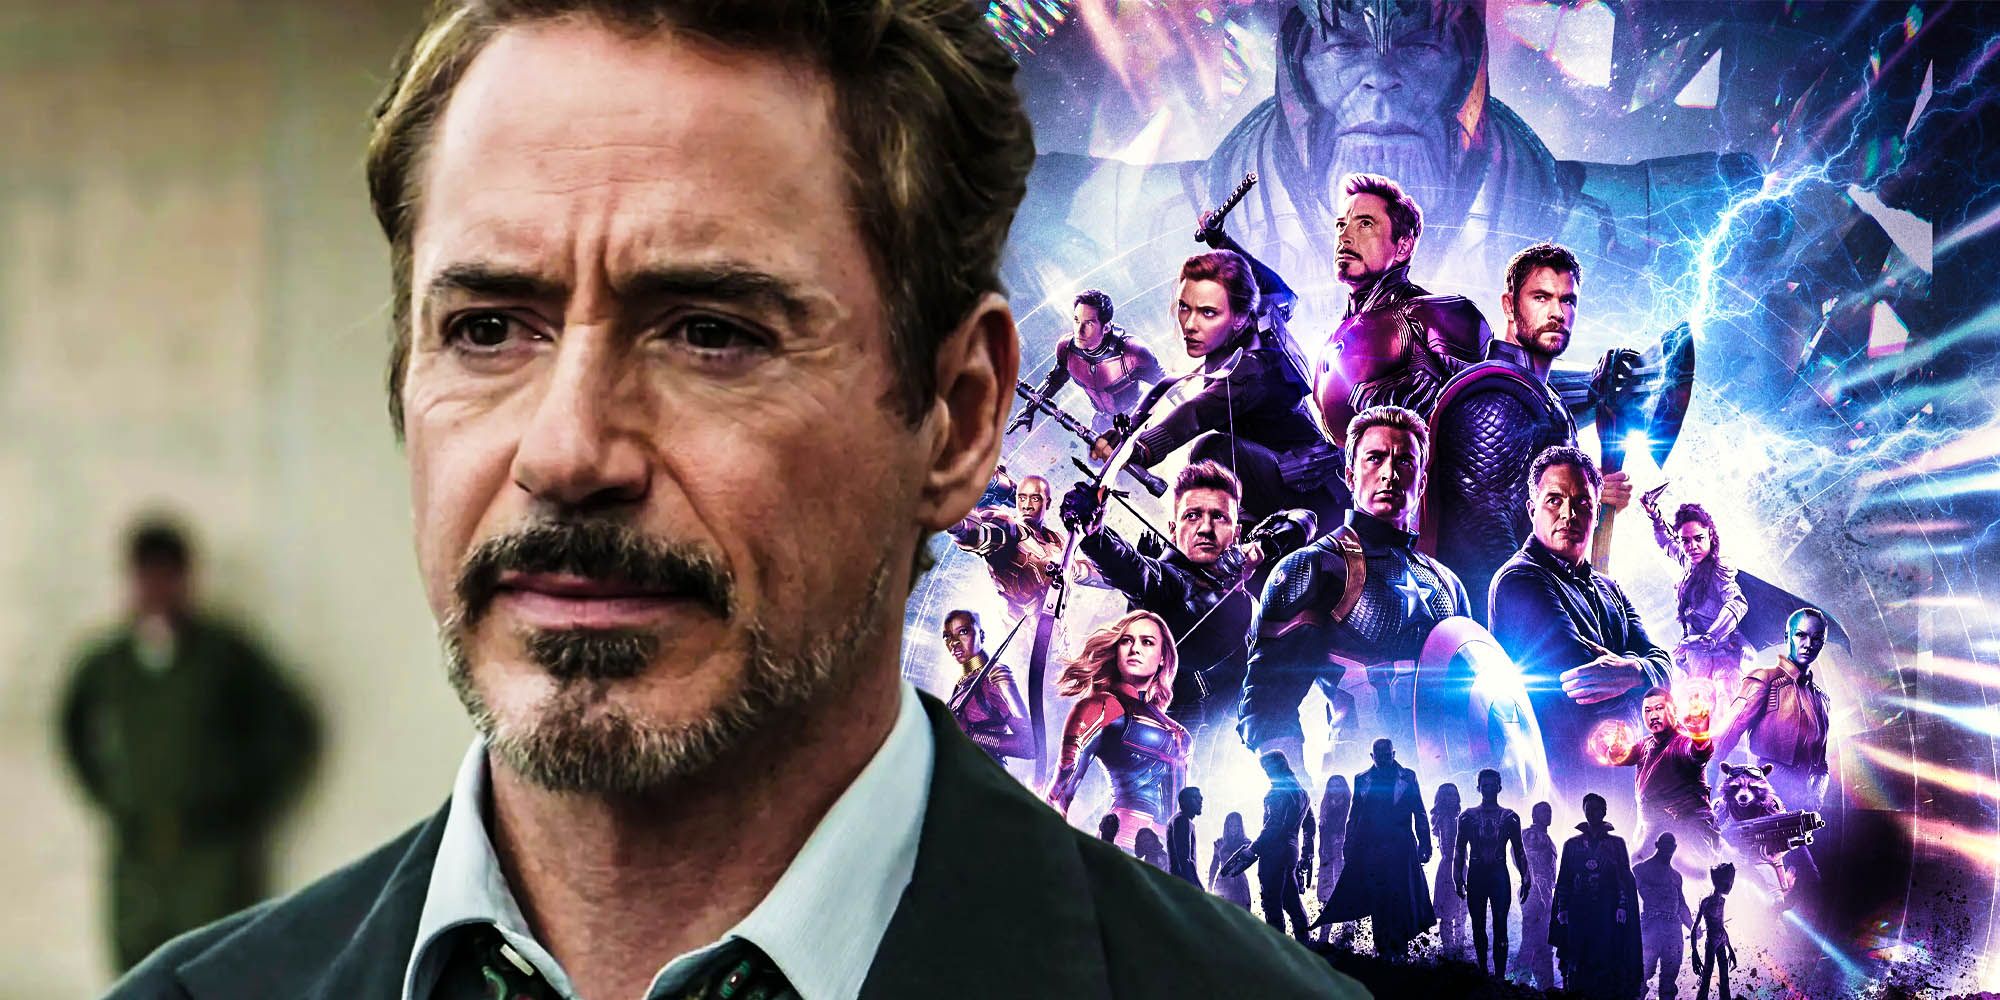 Avengers endgame has a missing Iron man story